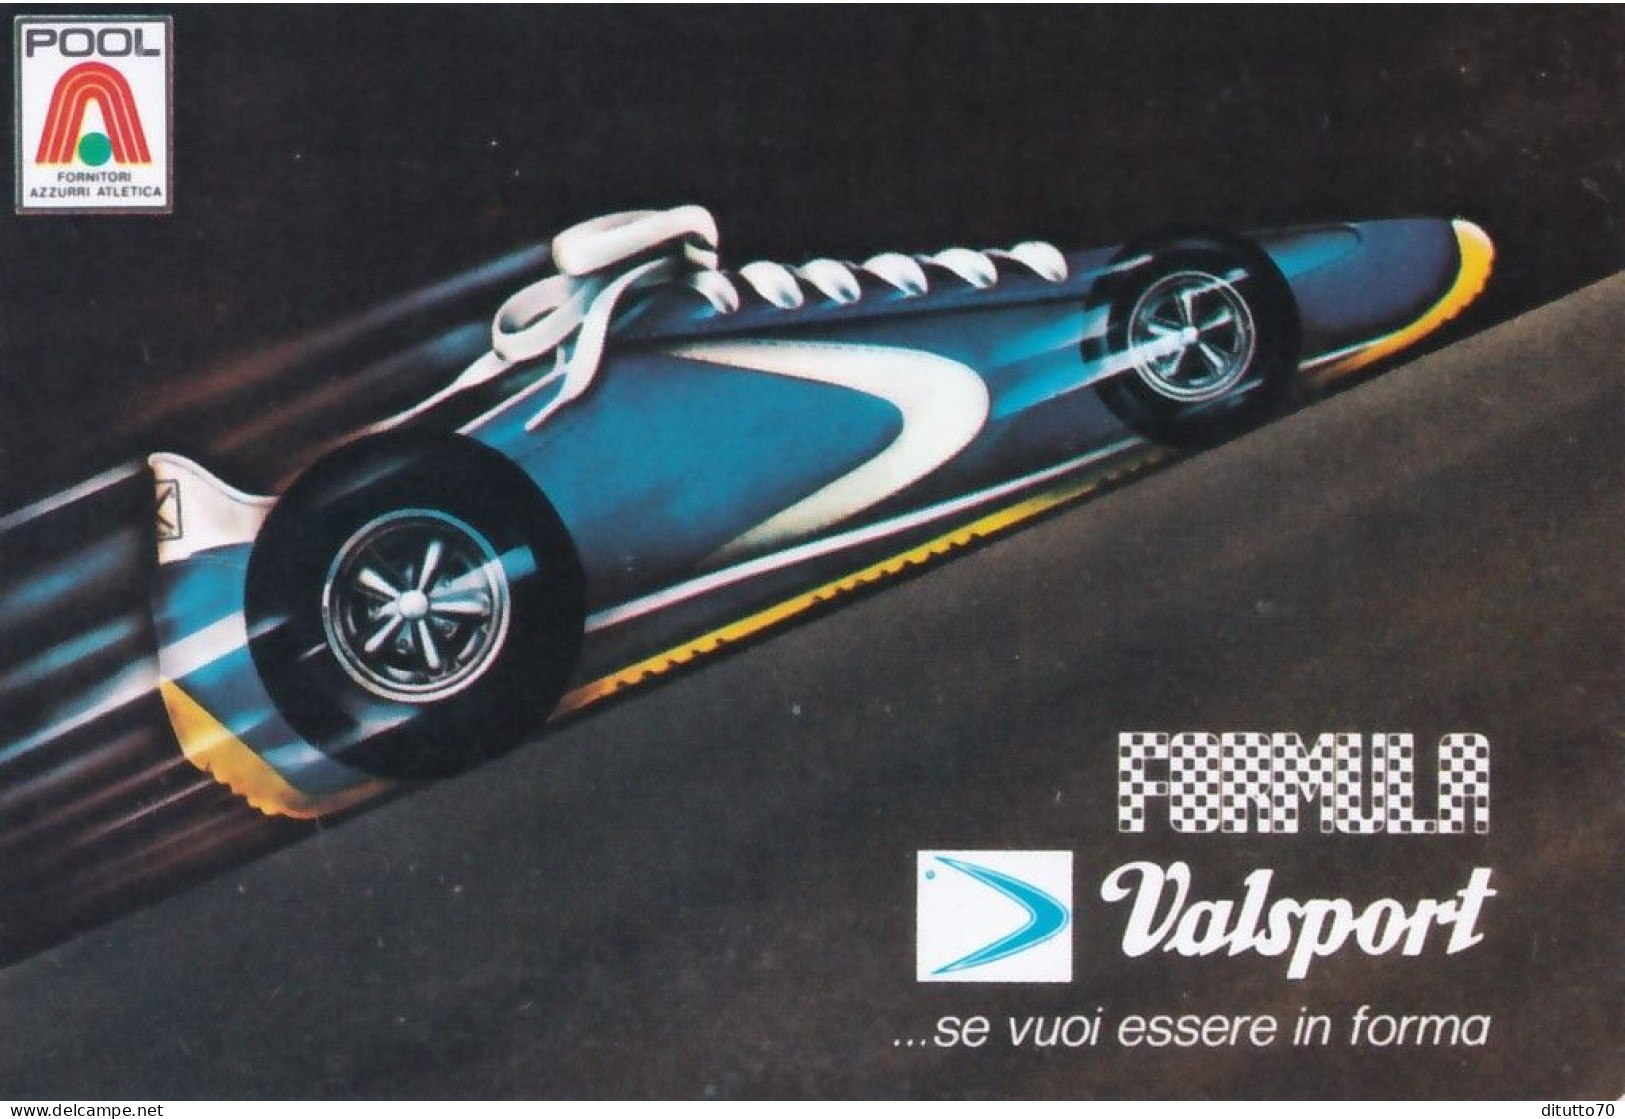 Calendarietto - Valsport - Anno 1977 - Tamaño Pequeño : 1971-80